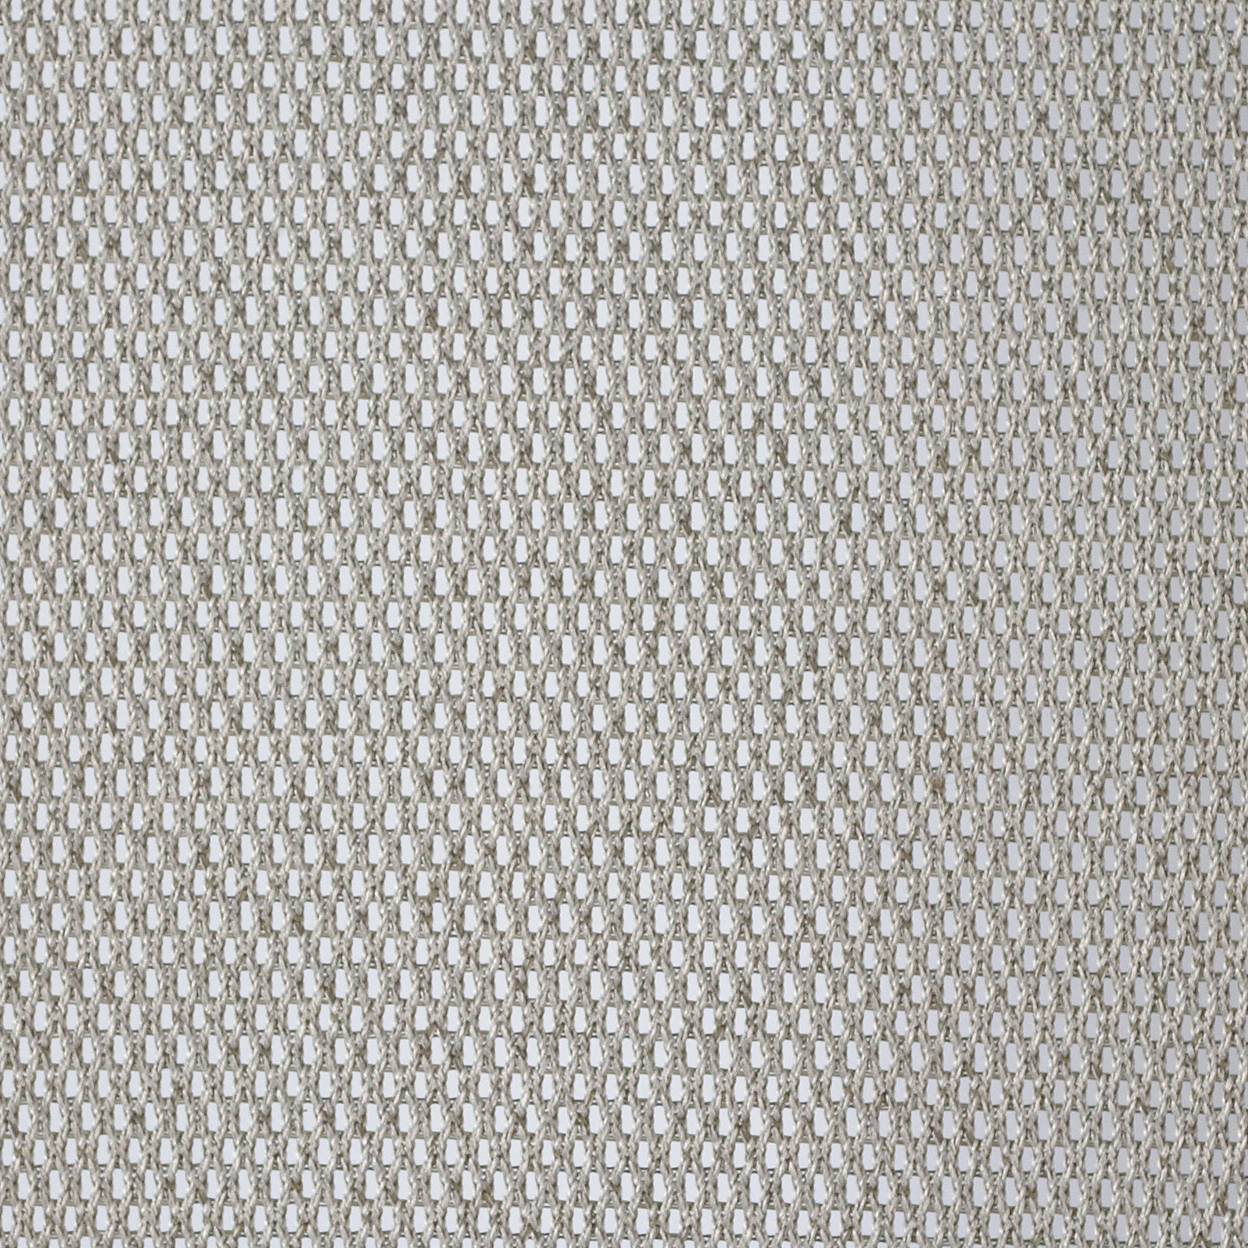 Silver Grey - Flexnet - Textiles - Materials - Herman Miller